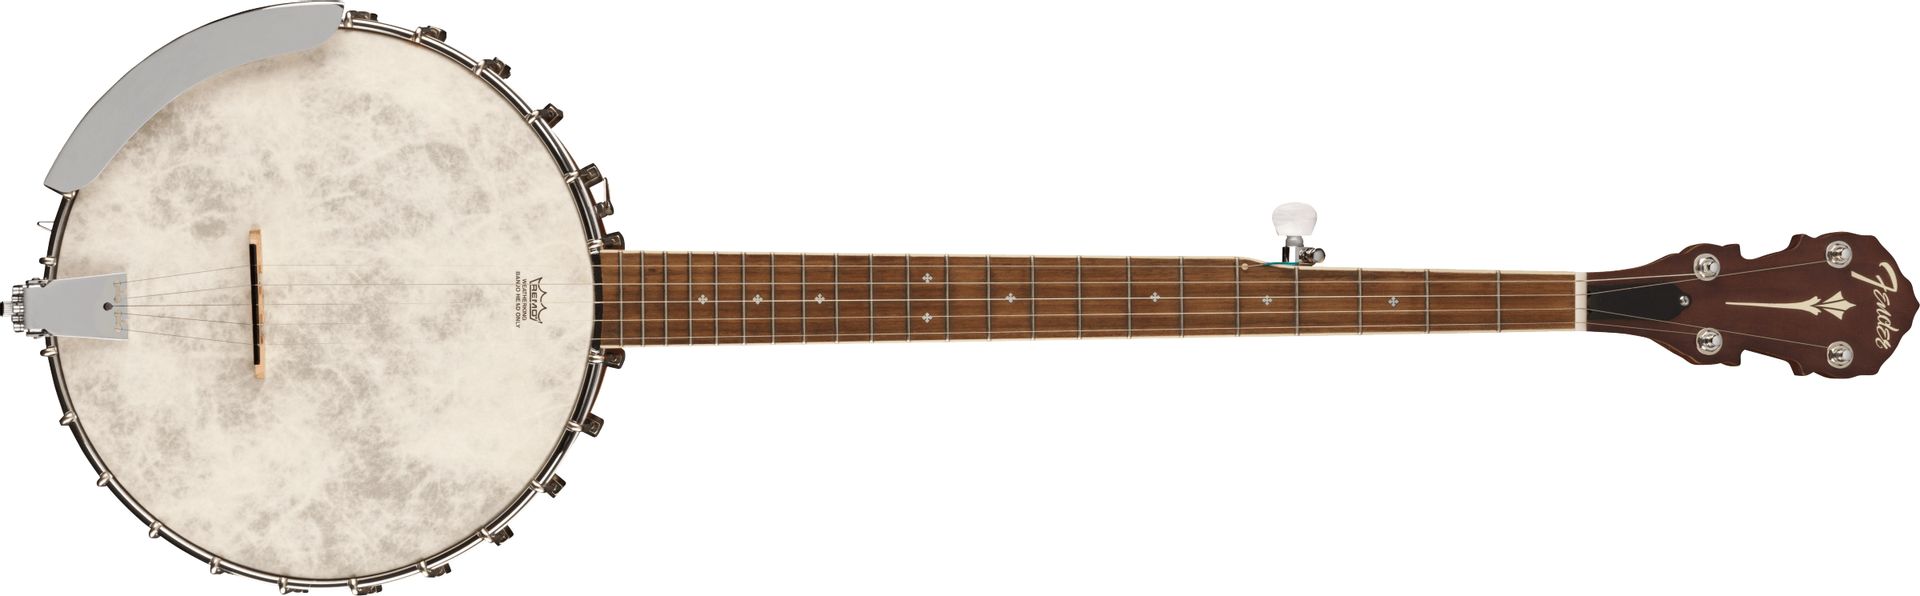 Fender PB-180E Banjo  Bluegrass Banjo  5-String  incl. Gigbag